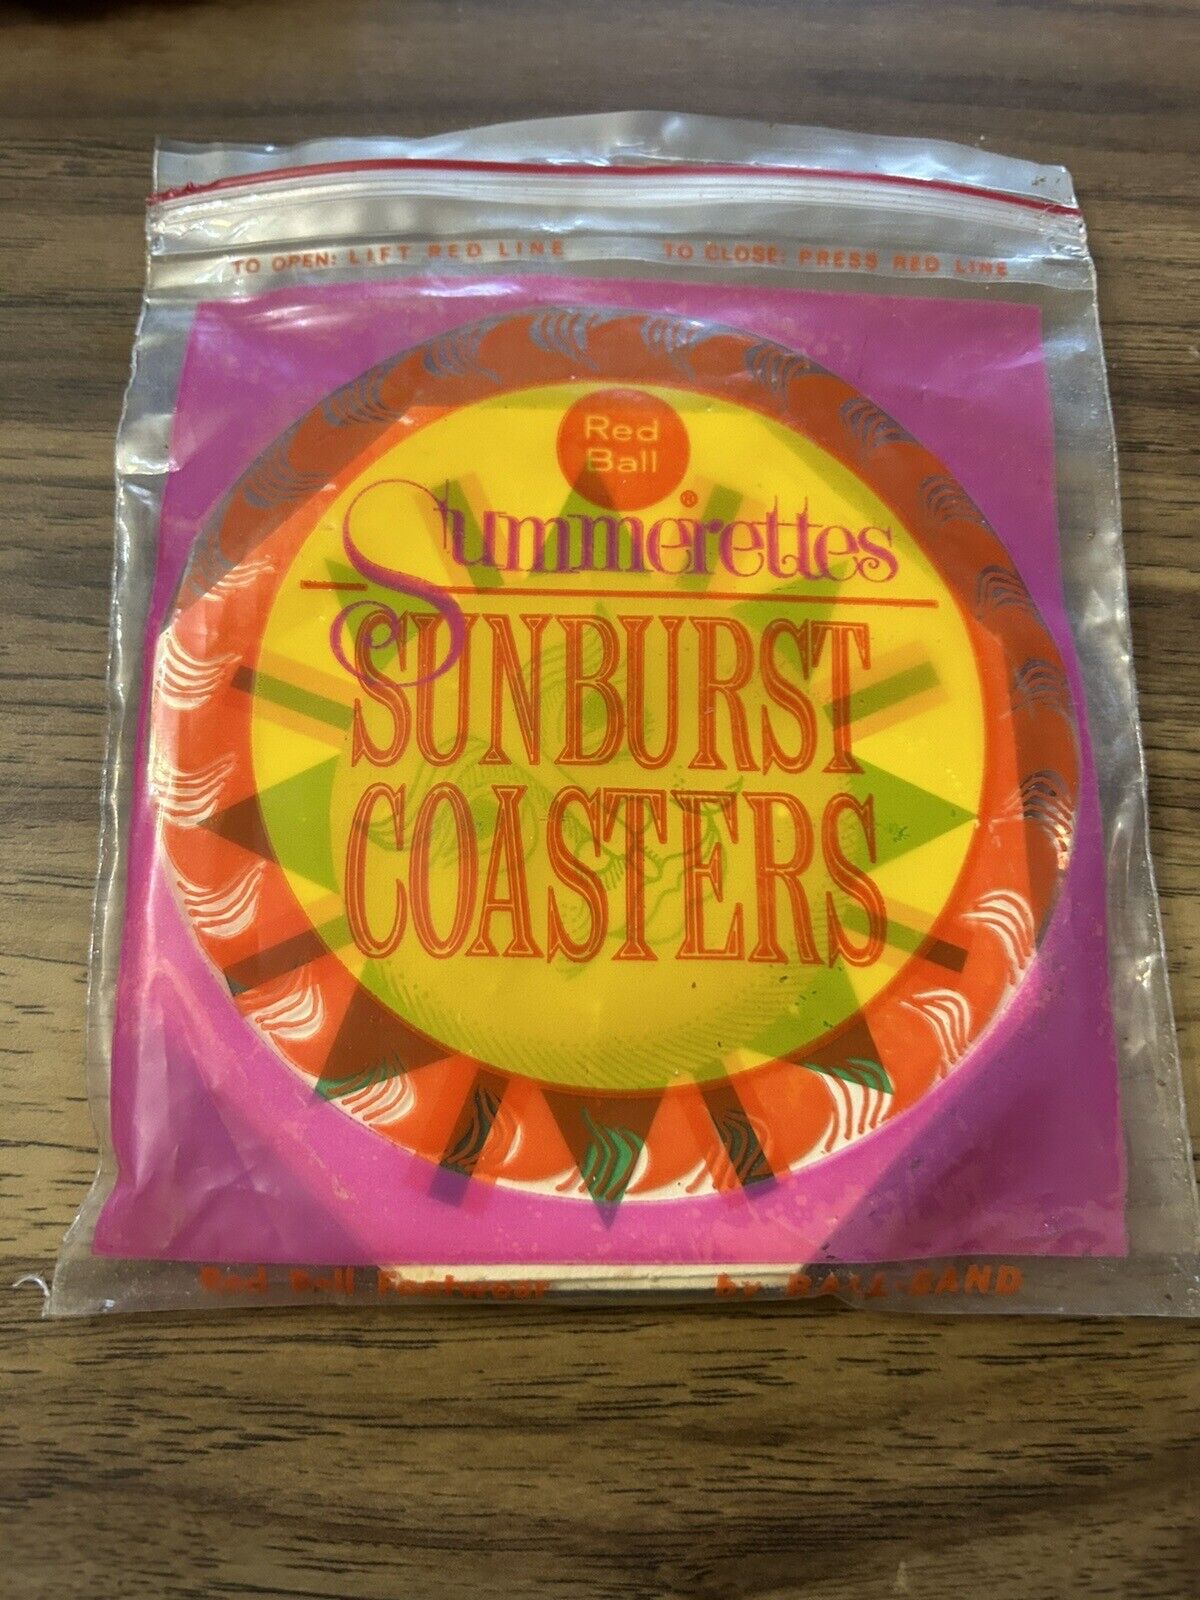 Vintage Summerettes Sunburst Coasters Red Ball Ball-Band Mishawaka WJ